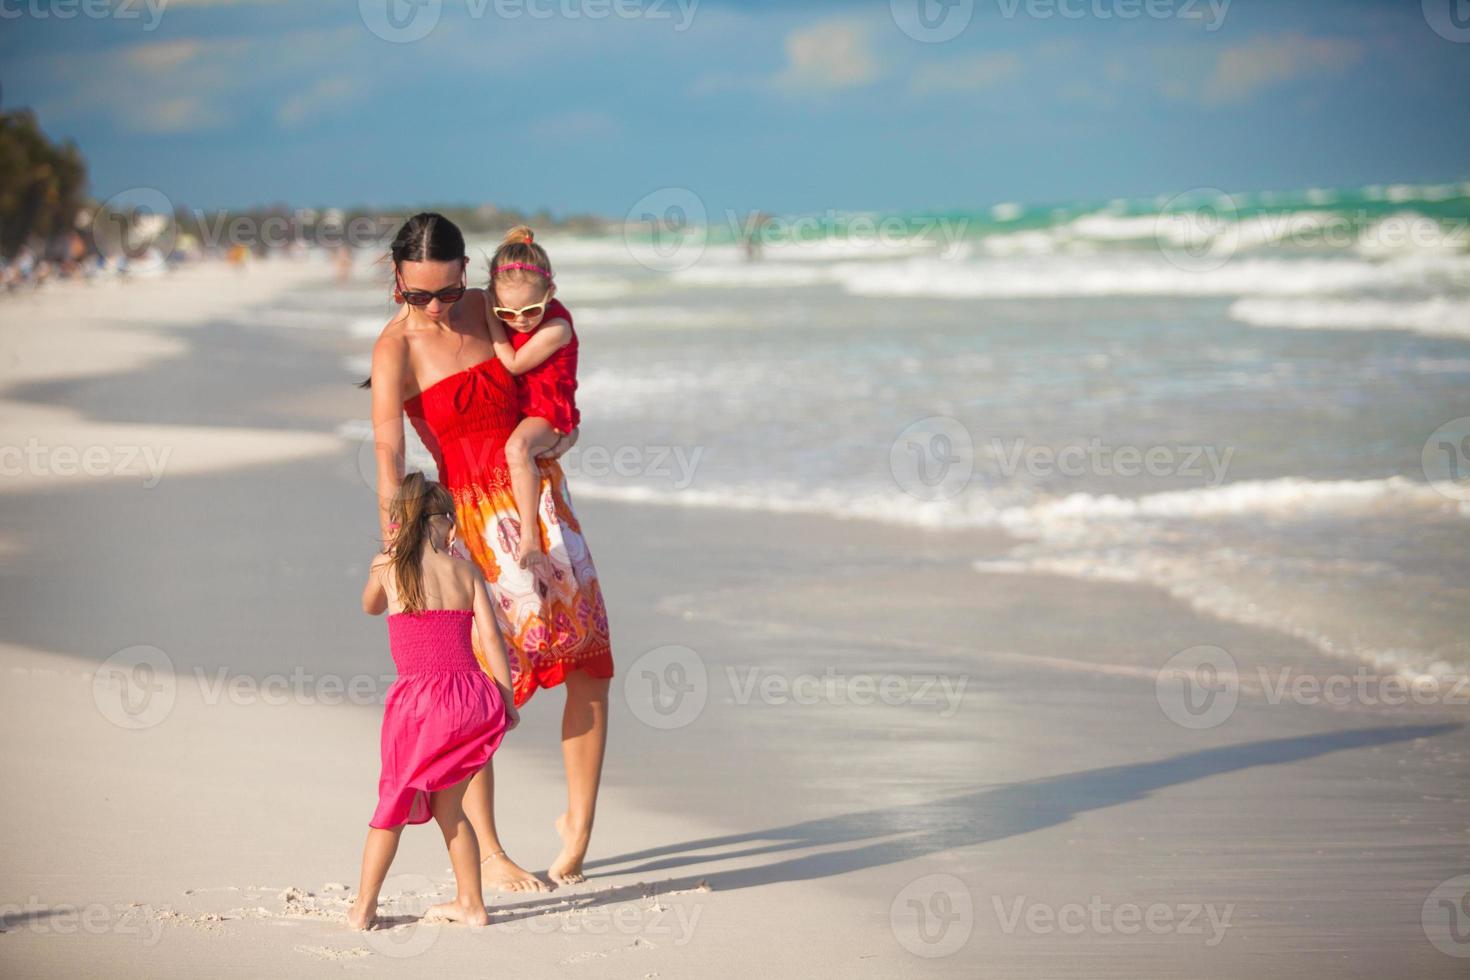 ung mor och två henne mode döttrar gående på exotisk strand på solig dag foto